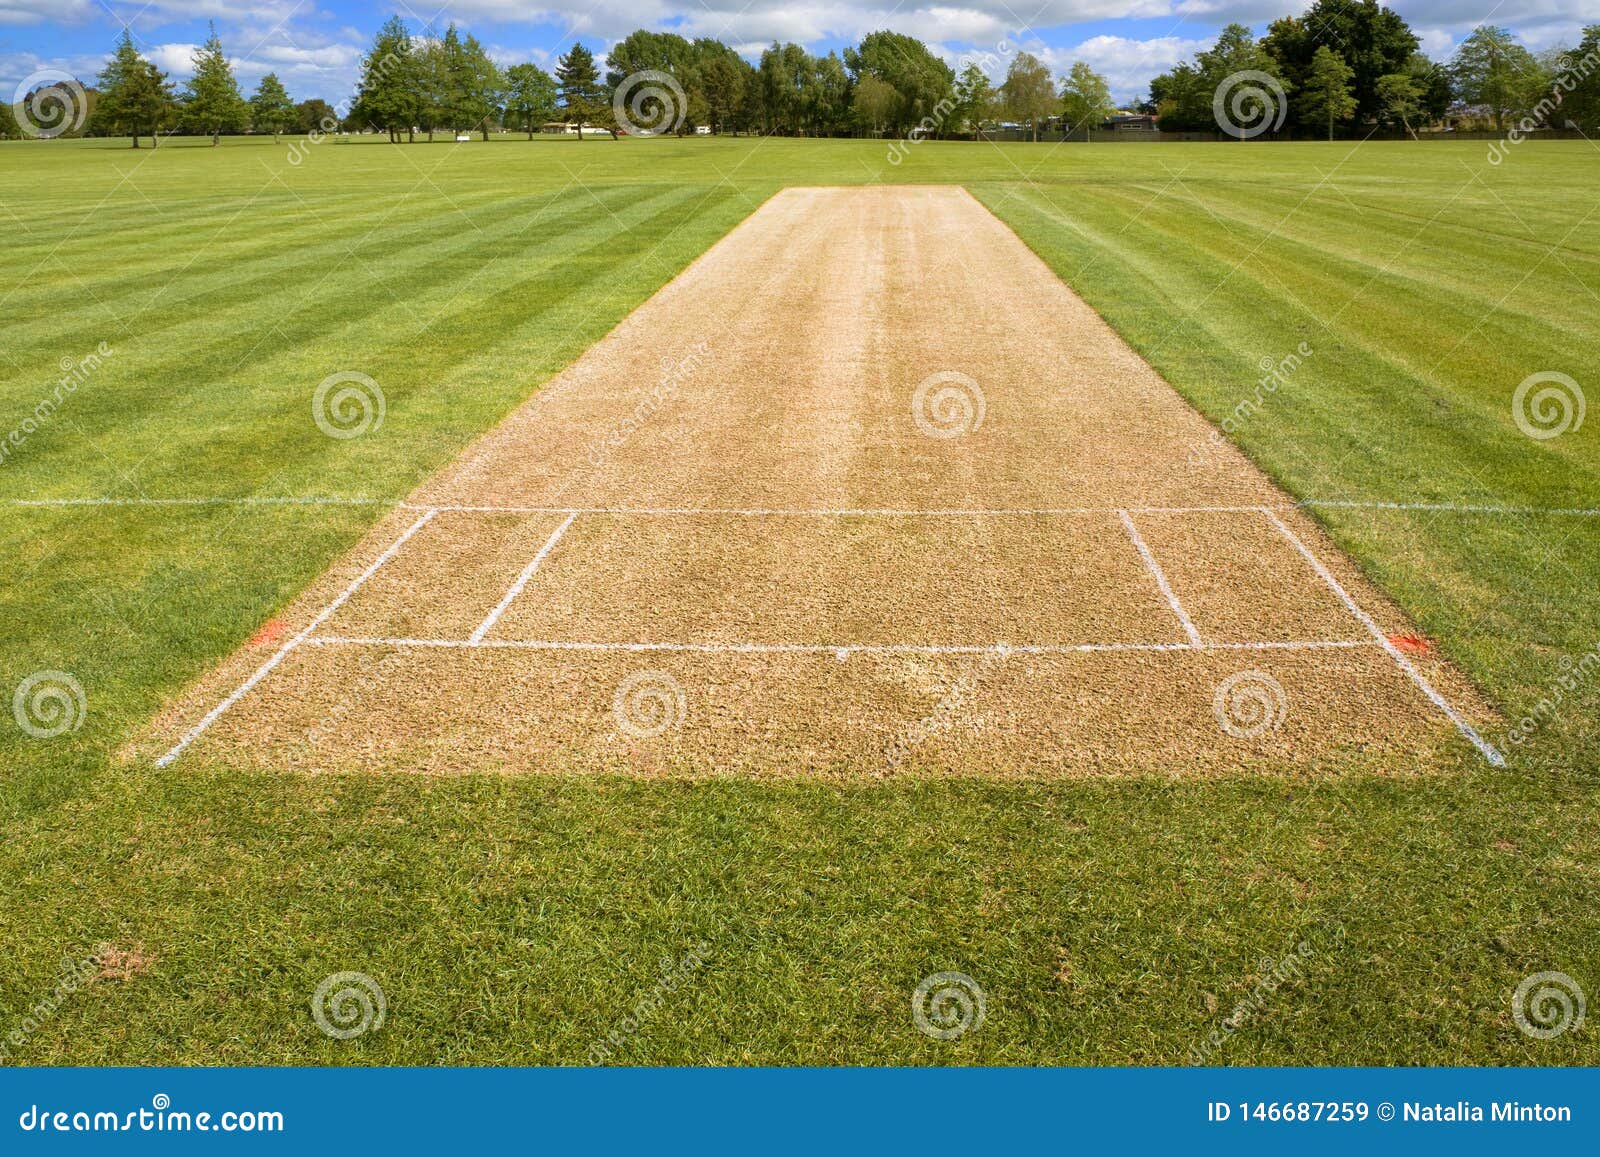 cricket pitch sport grass field empty background